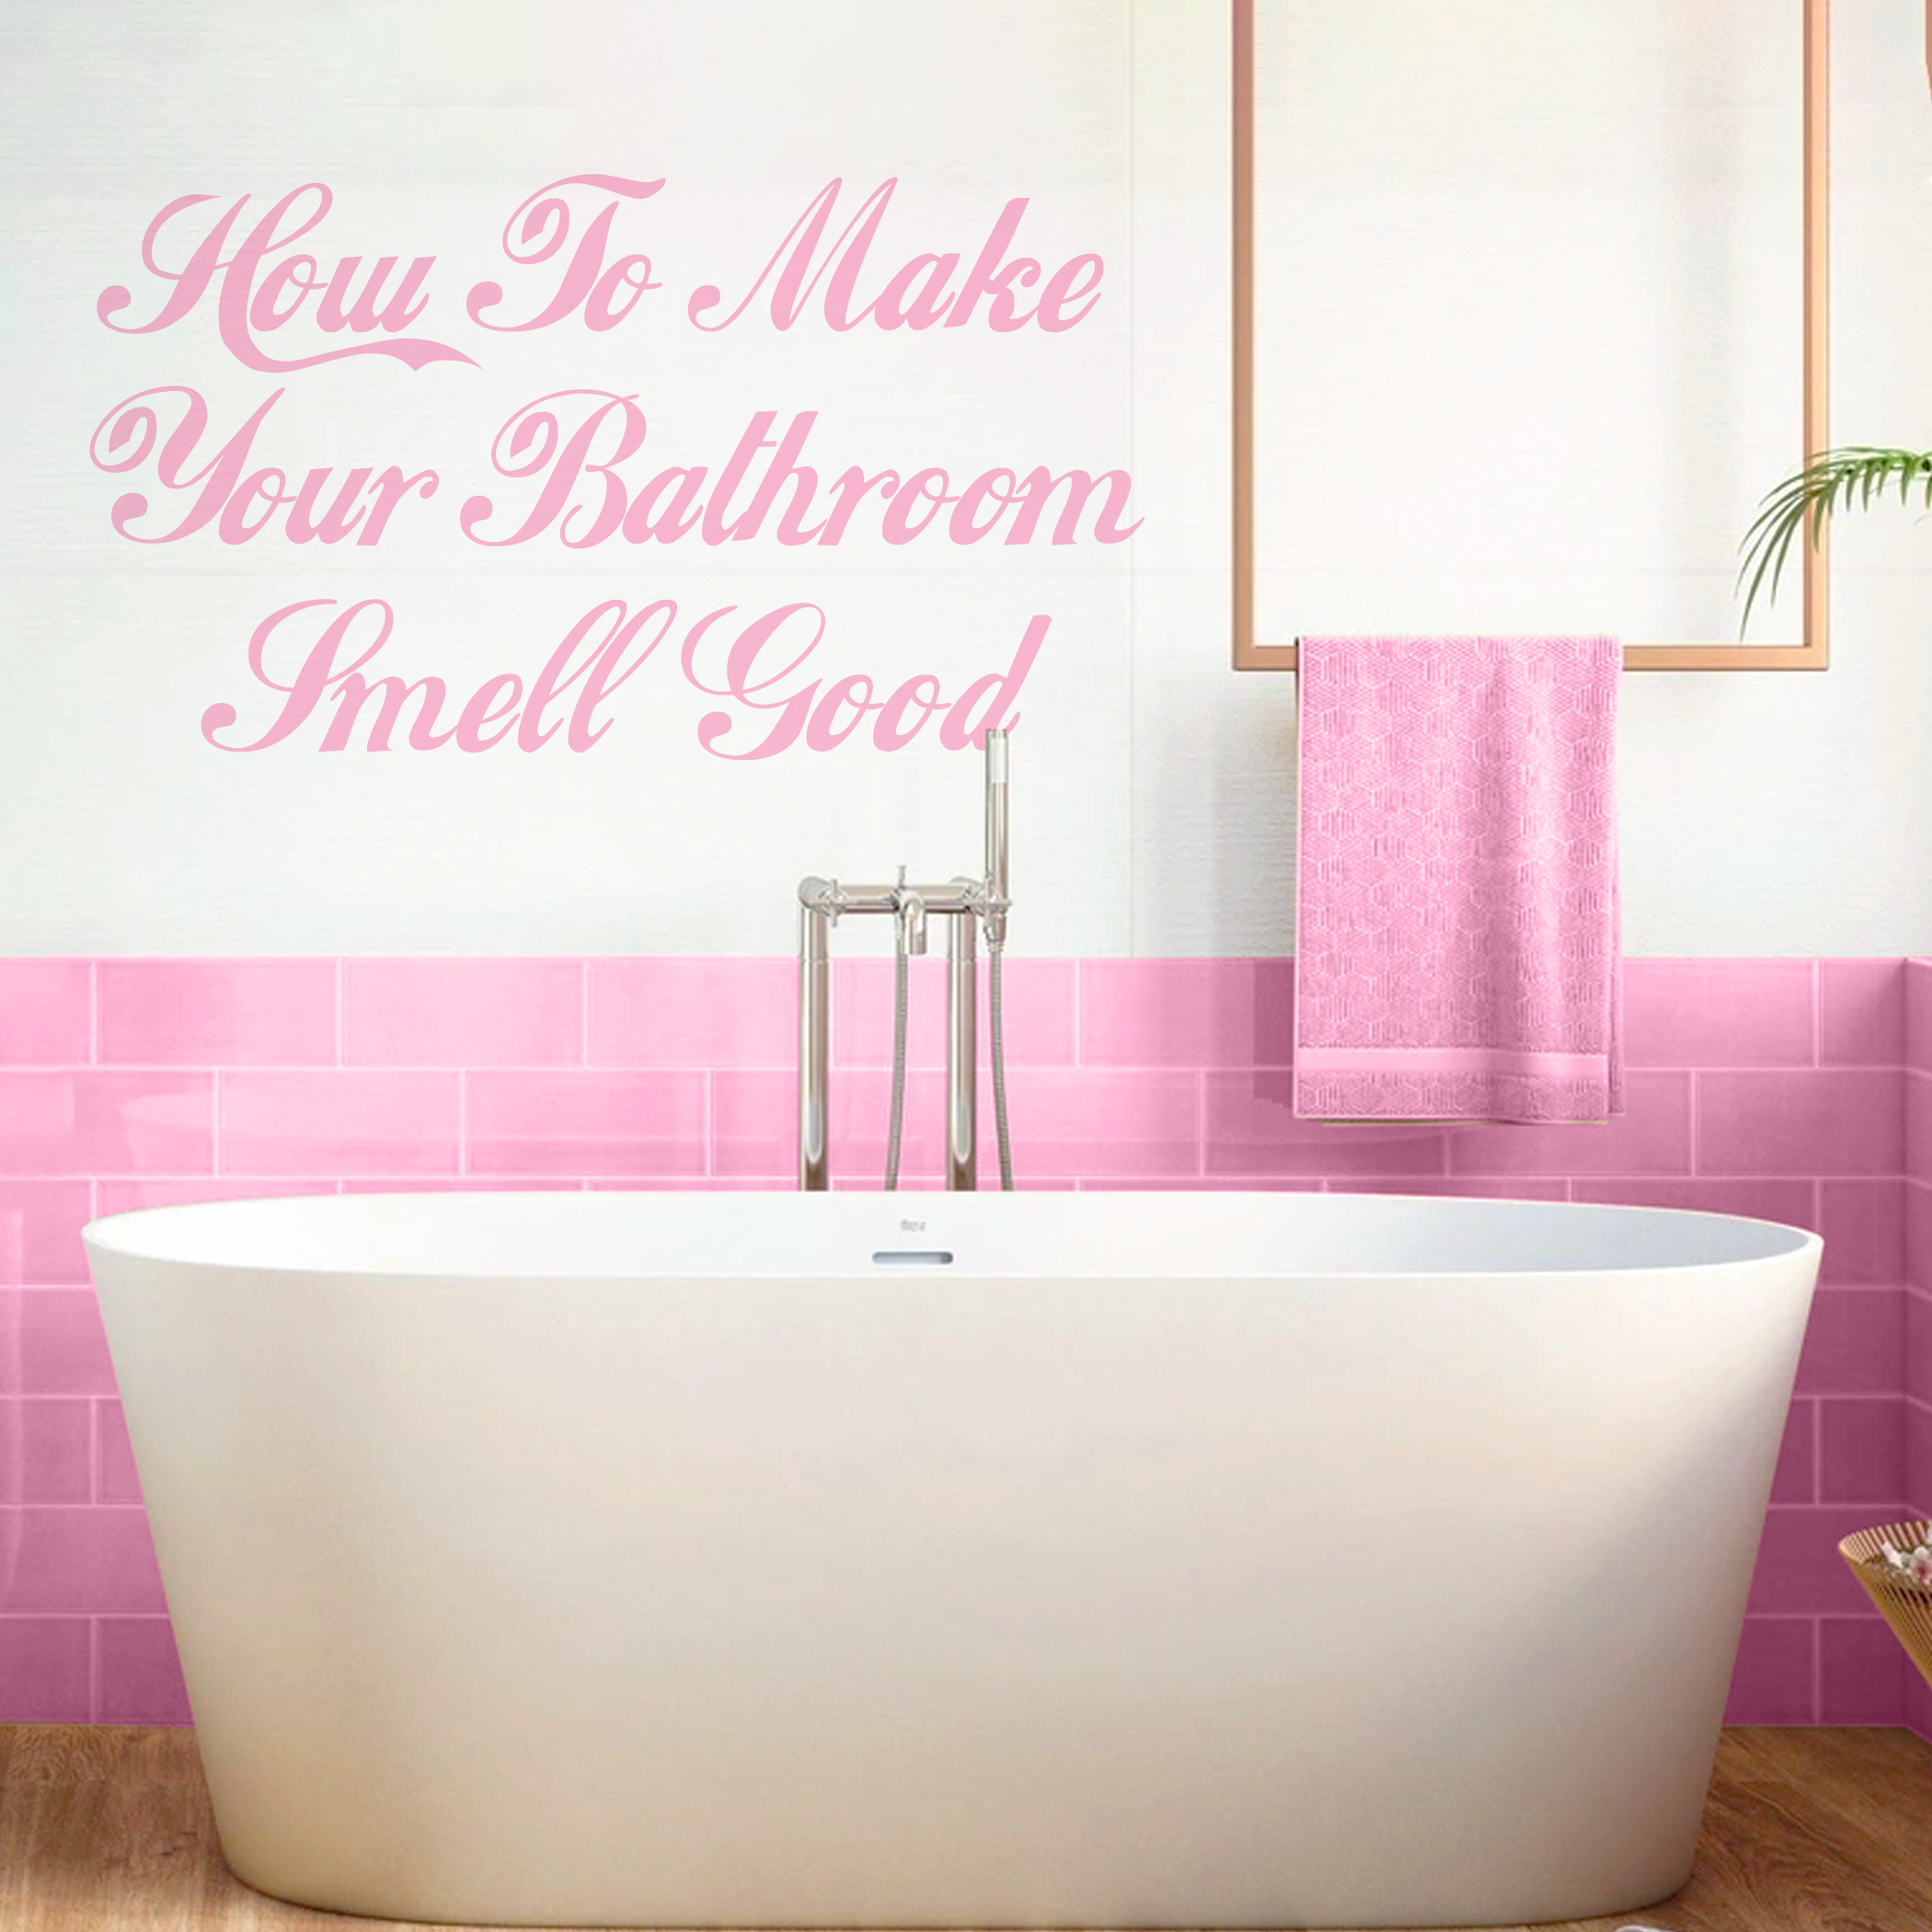 How To Make Bathroom Smell Good